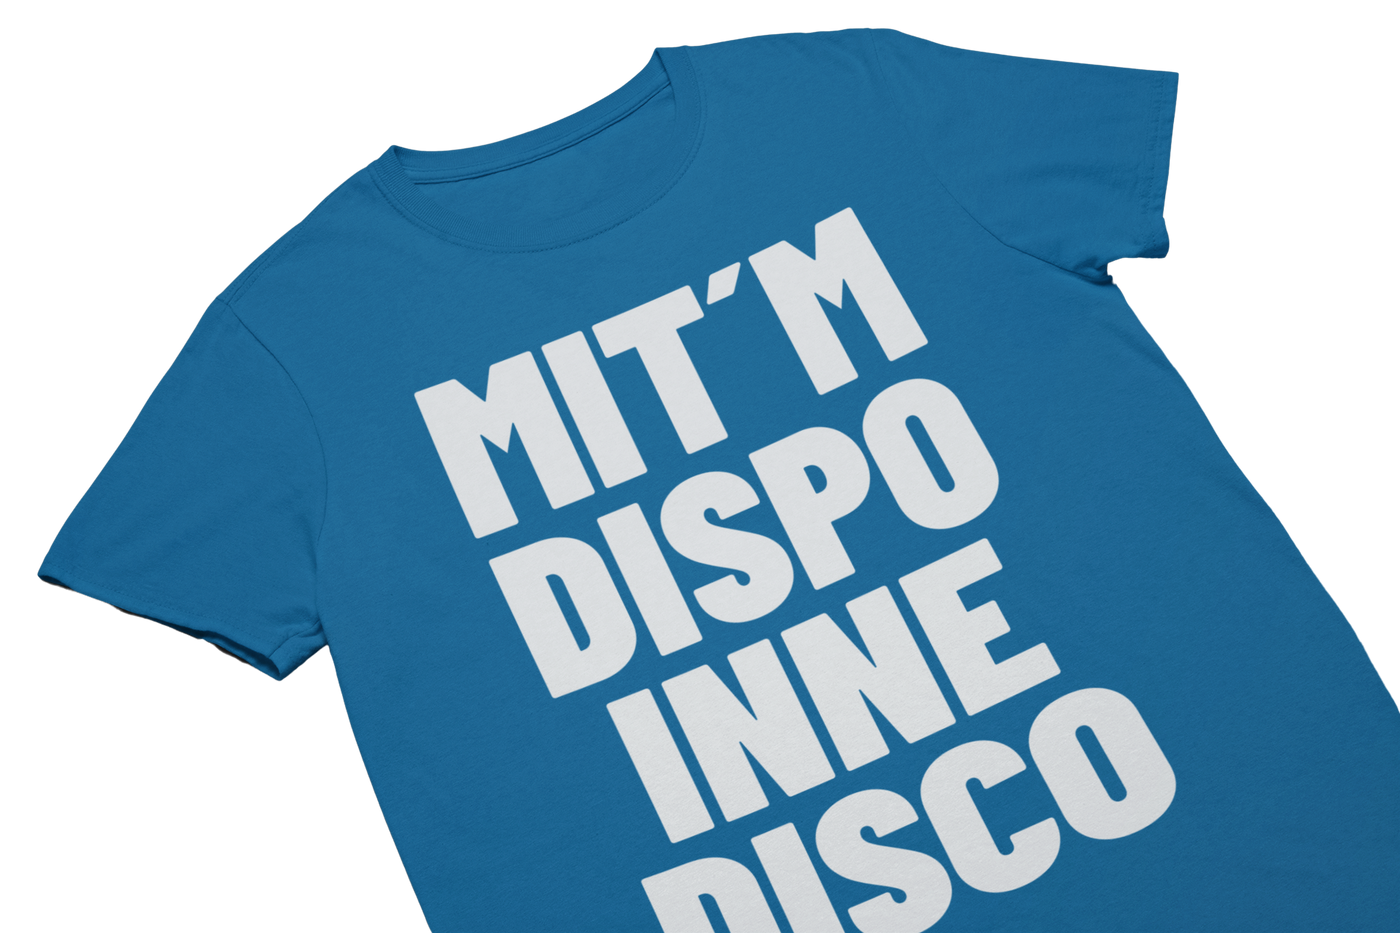 MIT´M DISPO INNE DISCO - T-Shirt Blau